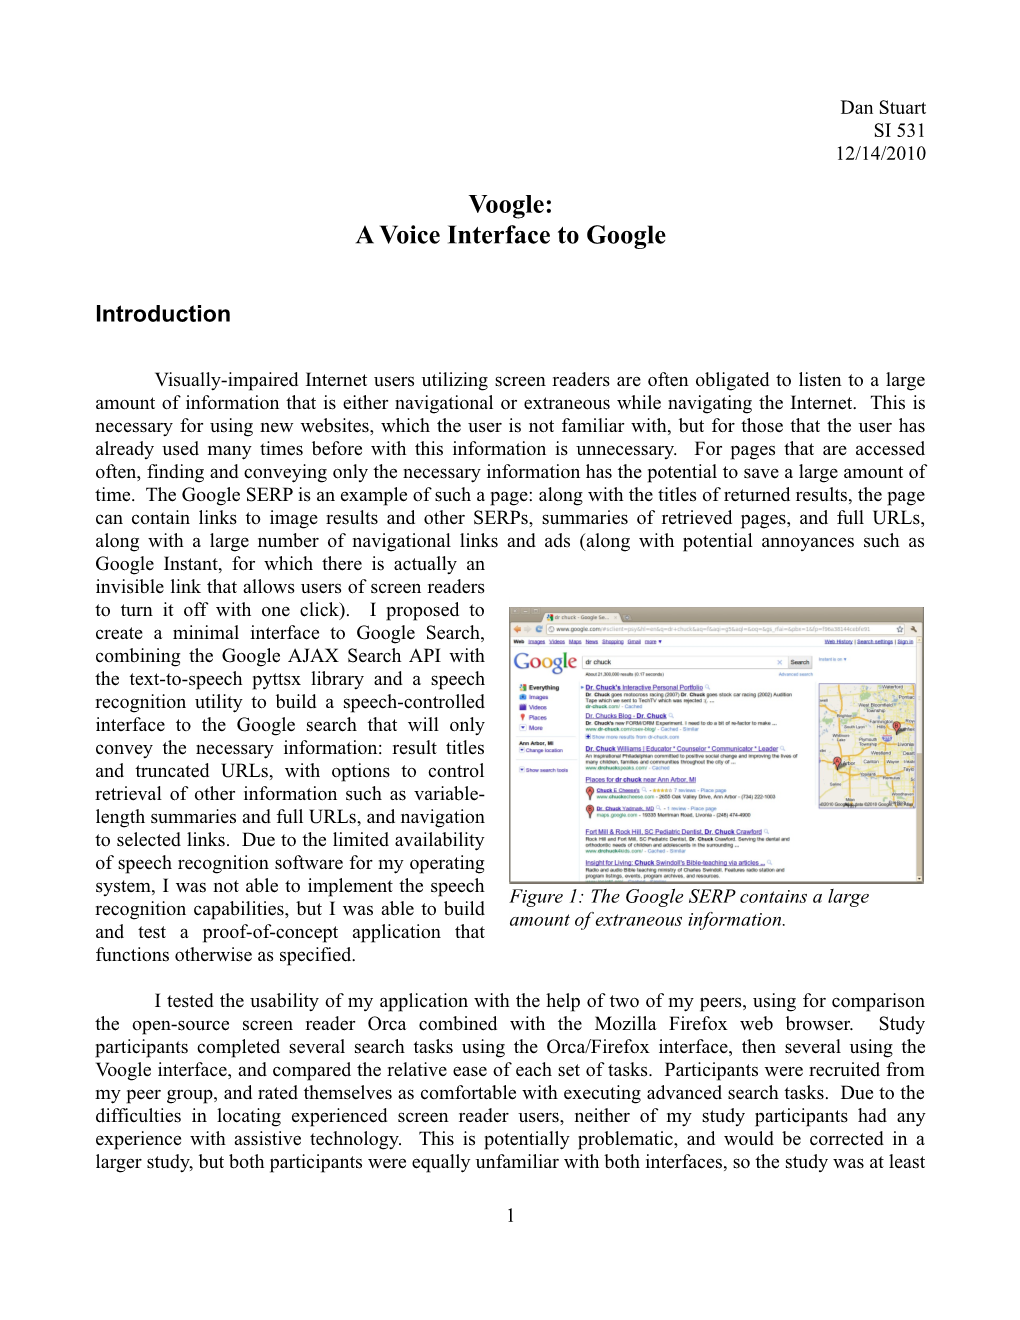 Voogle: a Voice Interface to Google